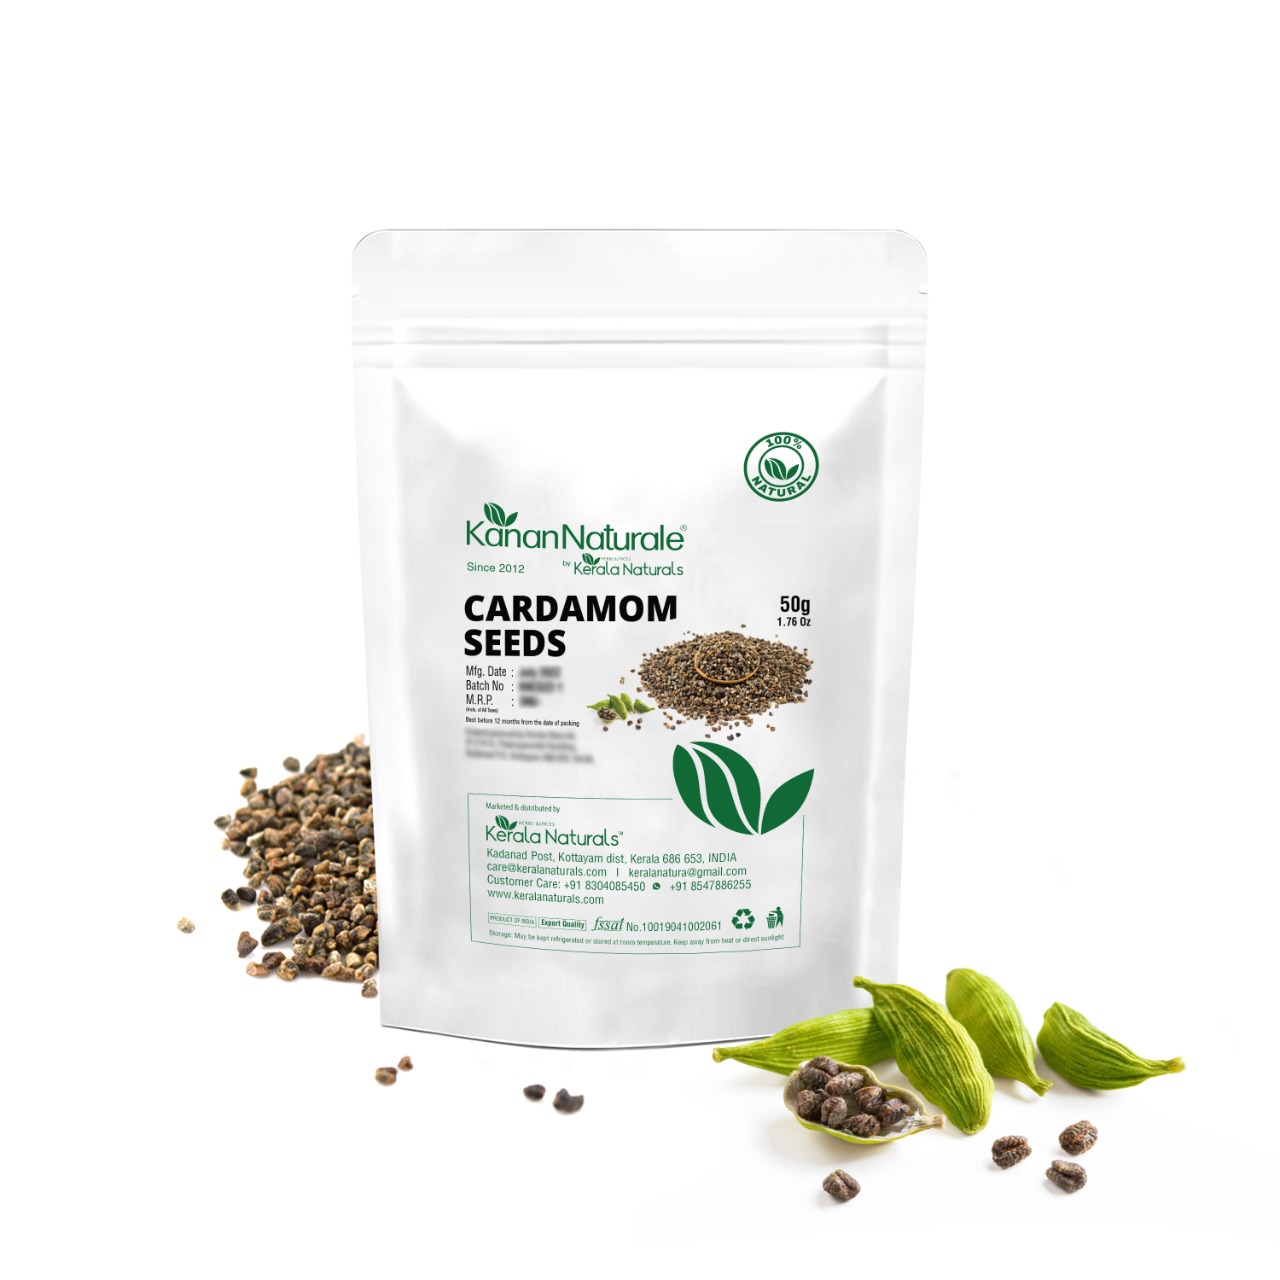 Buy Kanan Naturale Cardamom Seeds at Best Price Online